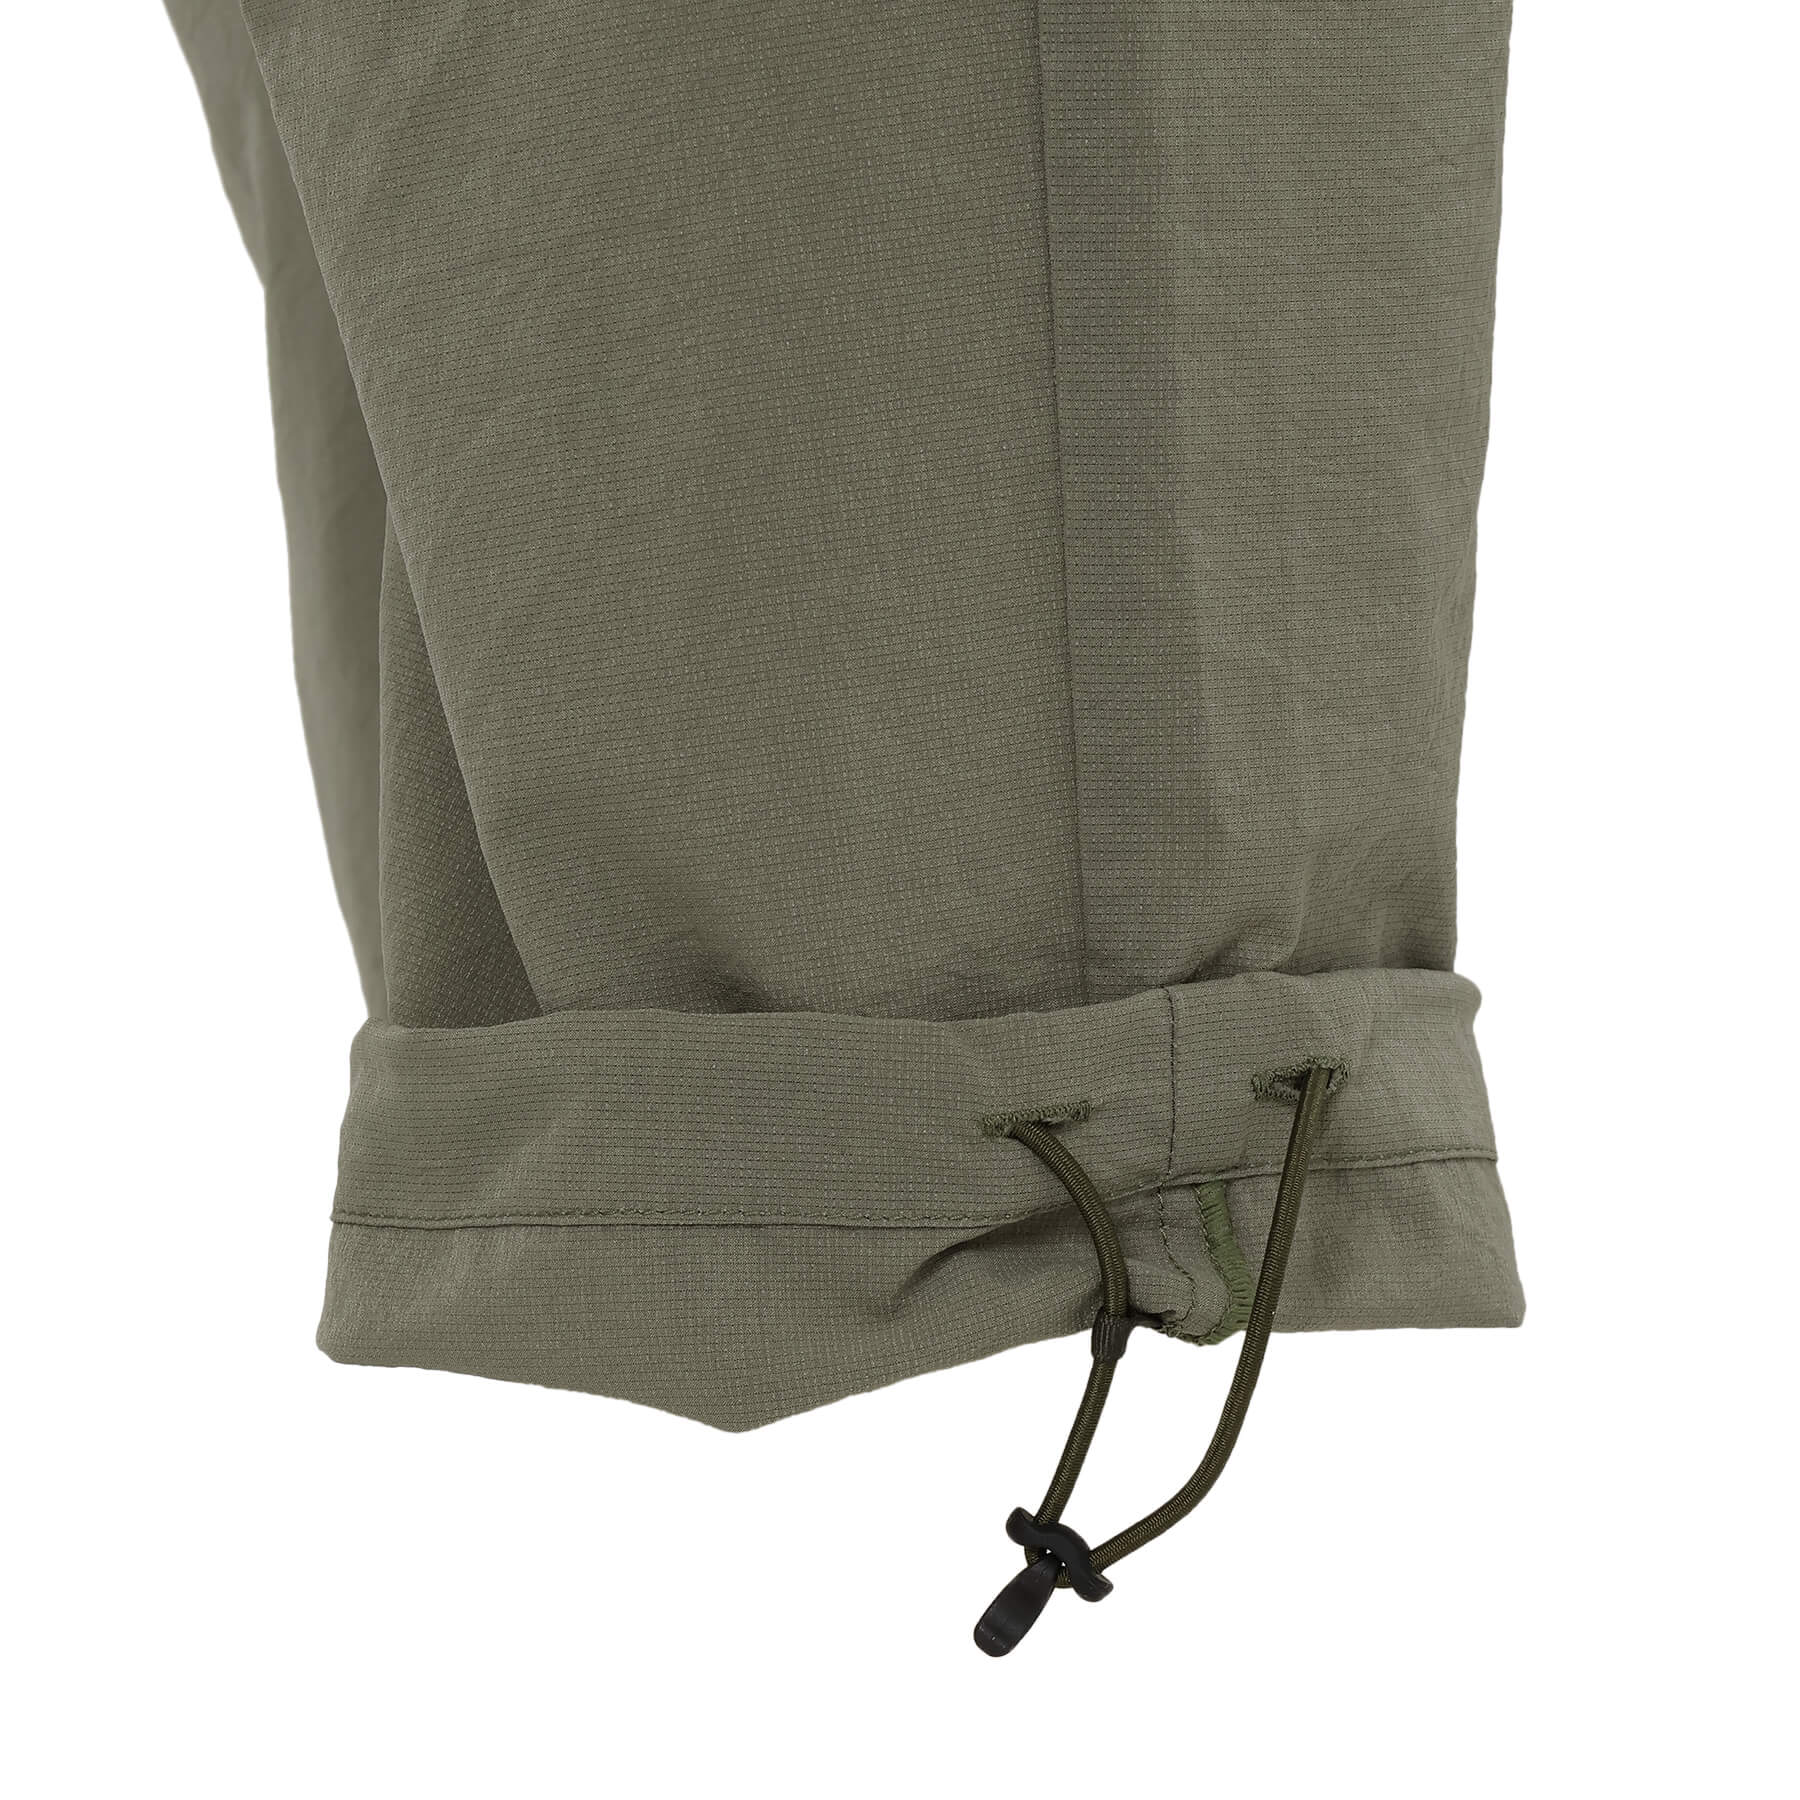 AIR CLOTH COMFY PANTS/エアクロスコンフィー パンツ – NANGA ONLINE SHOP